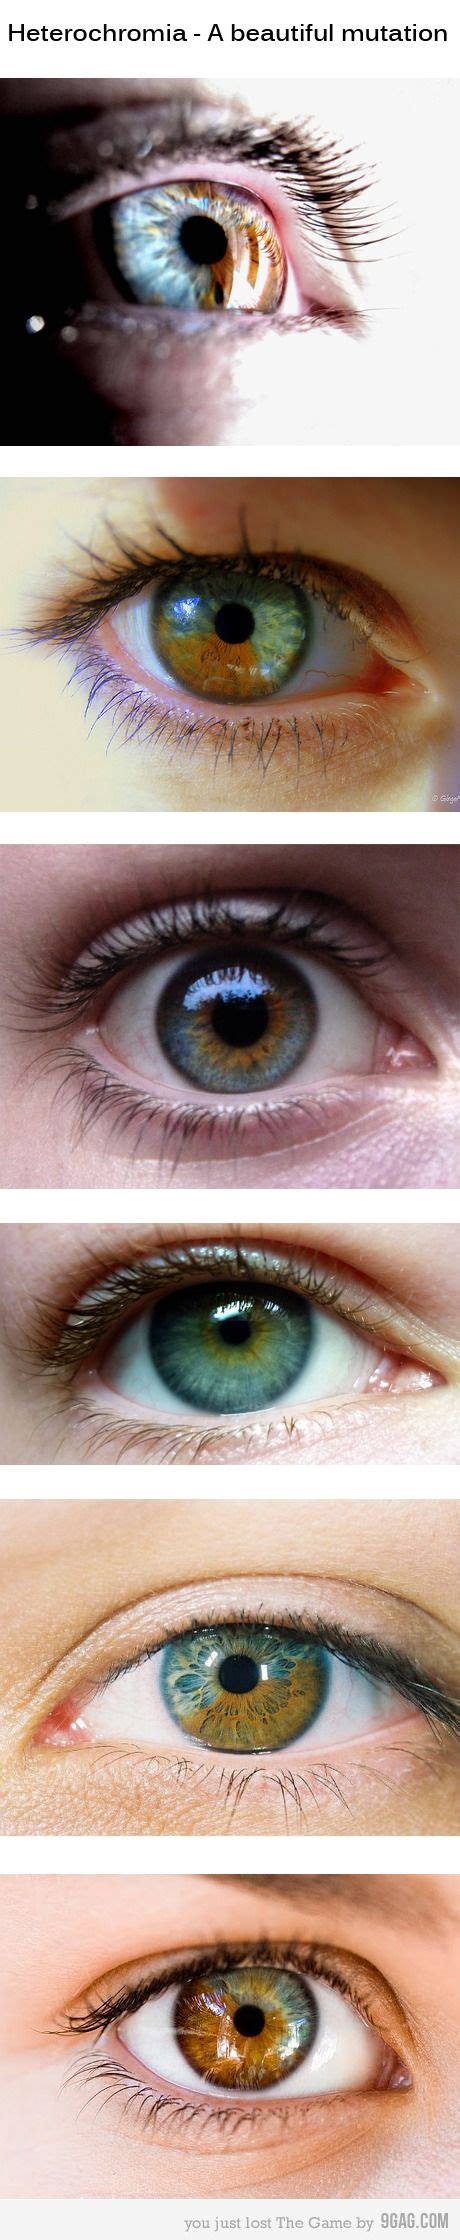 Heterochromia A Beautiful Mutation Heterochromia Is Relatively Rare It Affects Around 11 In